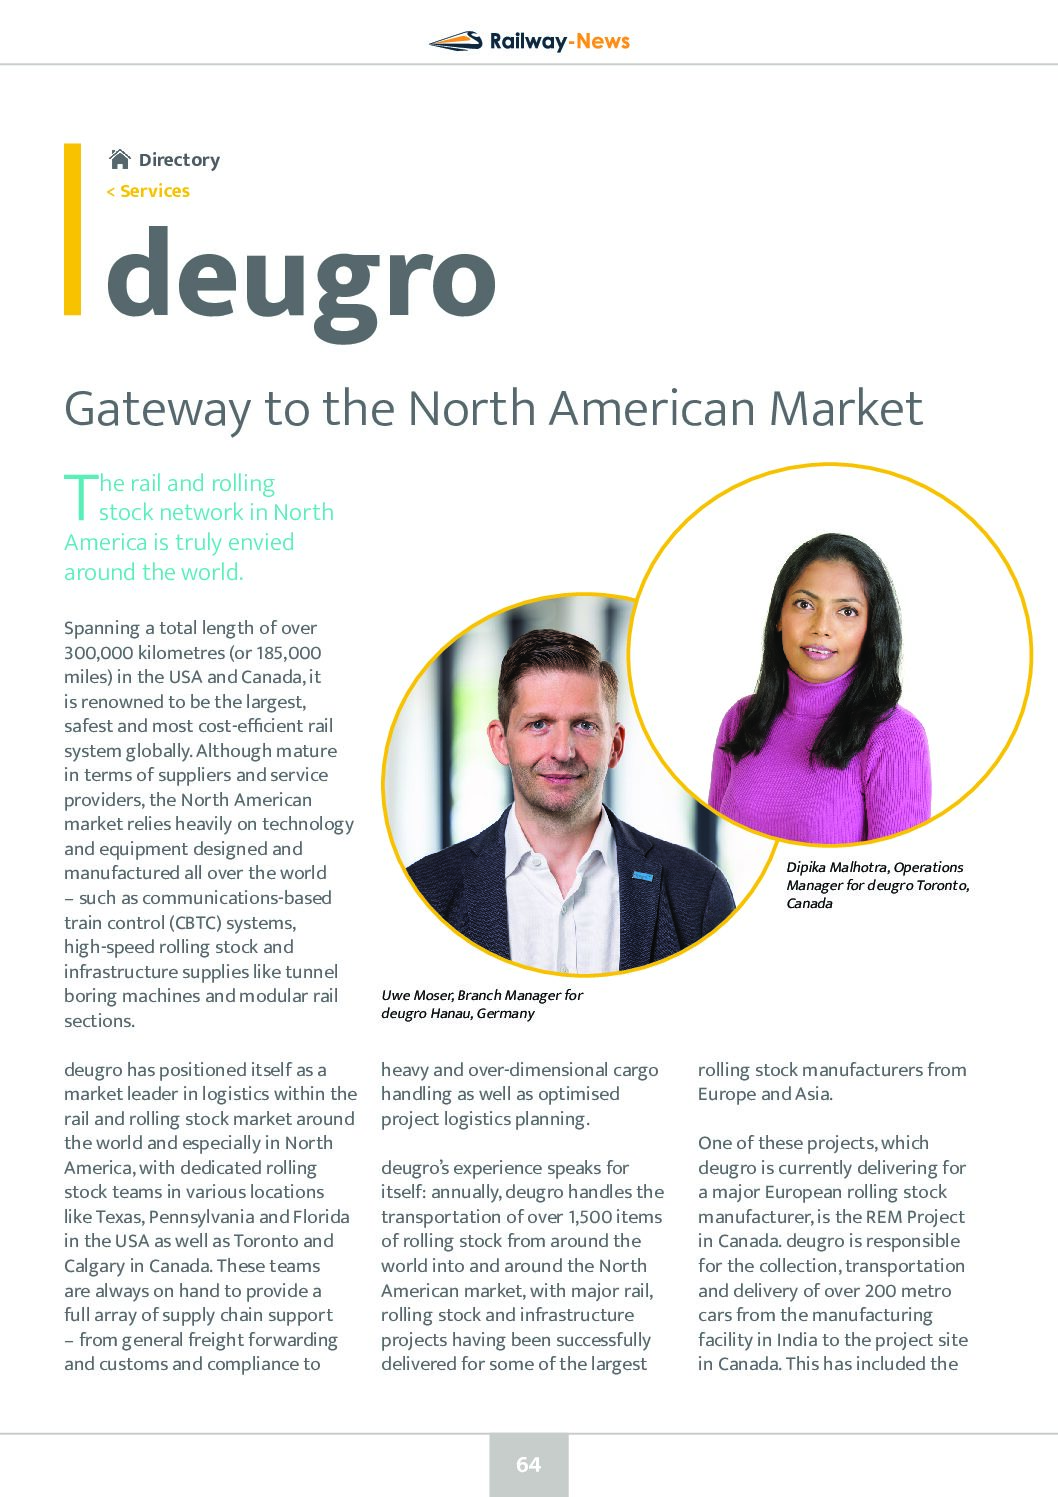 deugro – Gateway to the North American Market